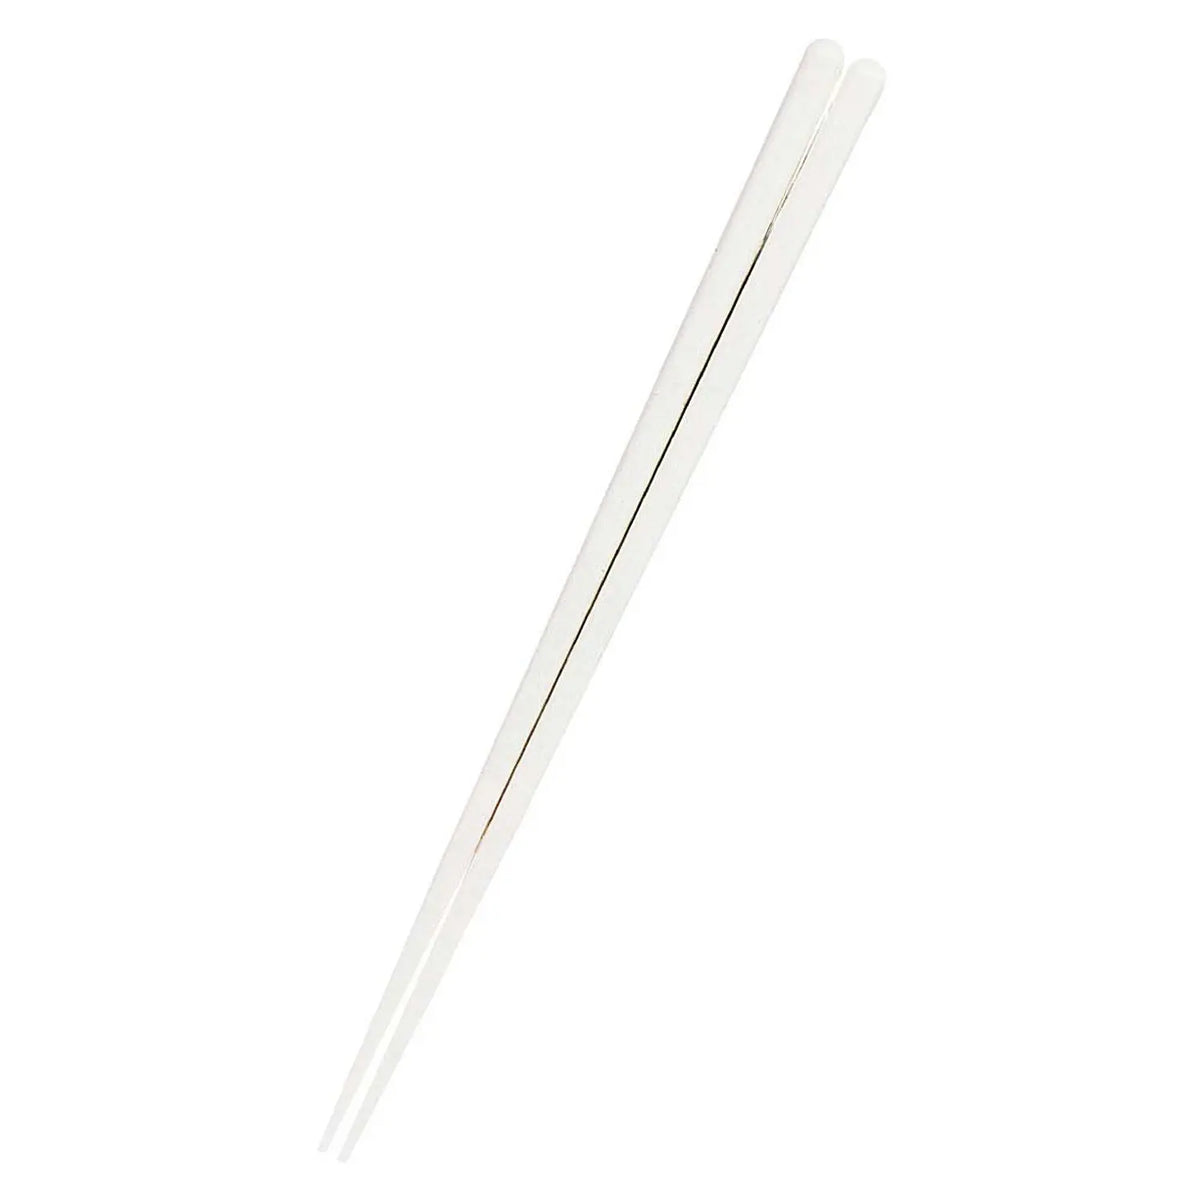 Komorijushi SPS Resin Heat Resistant Chopsticks